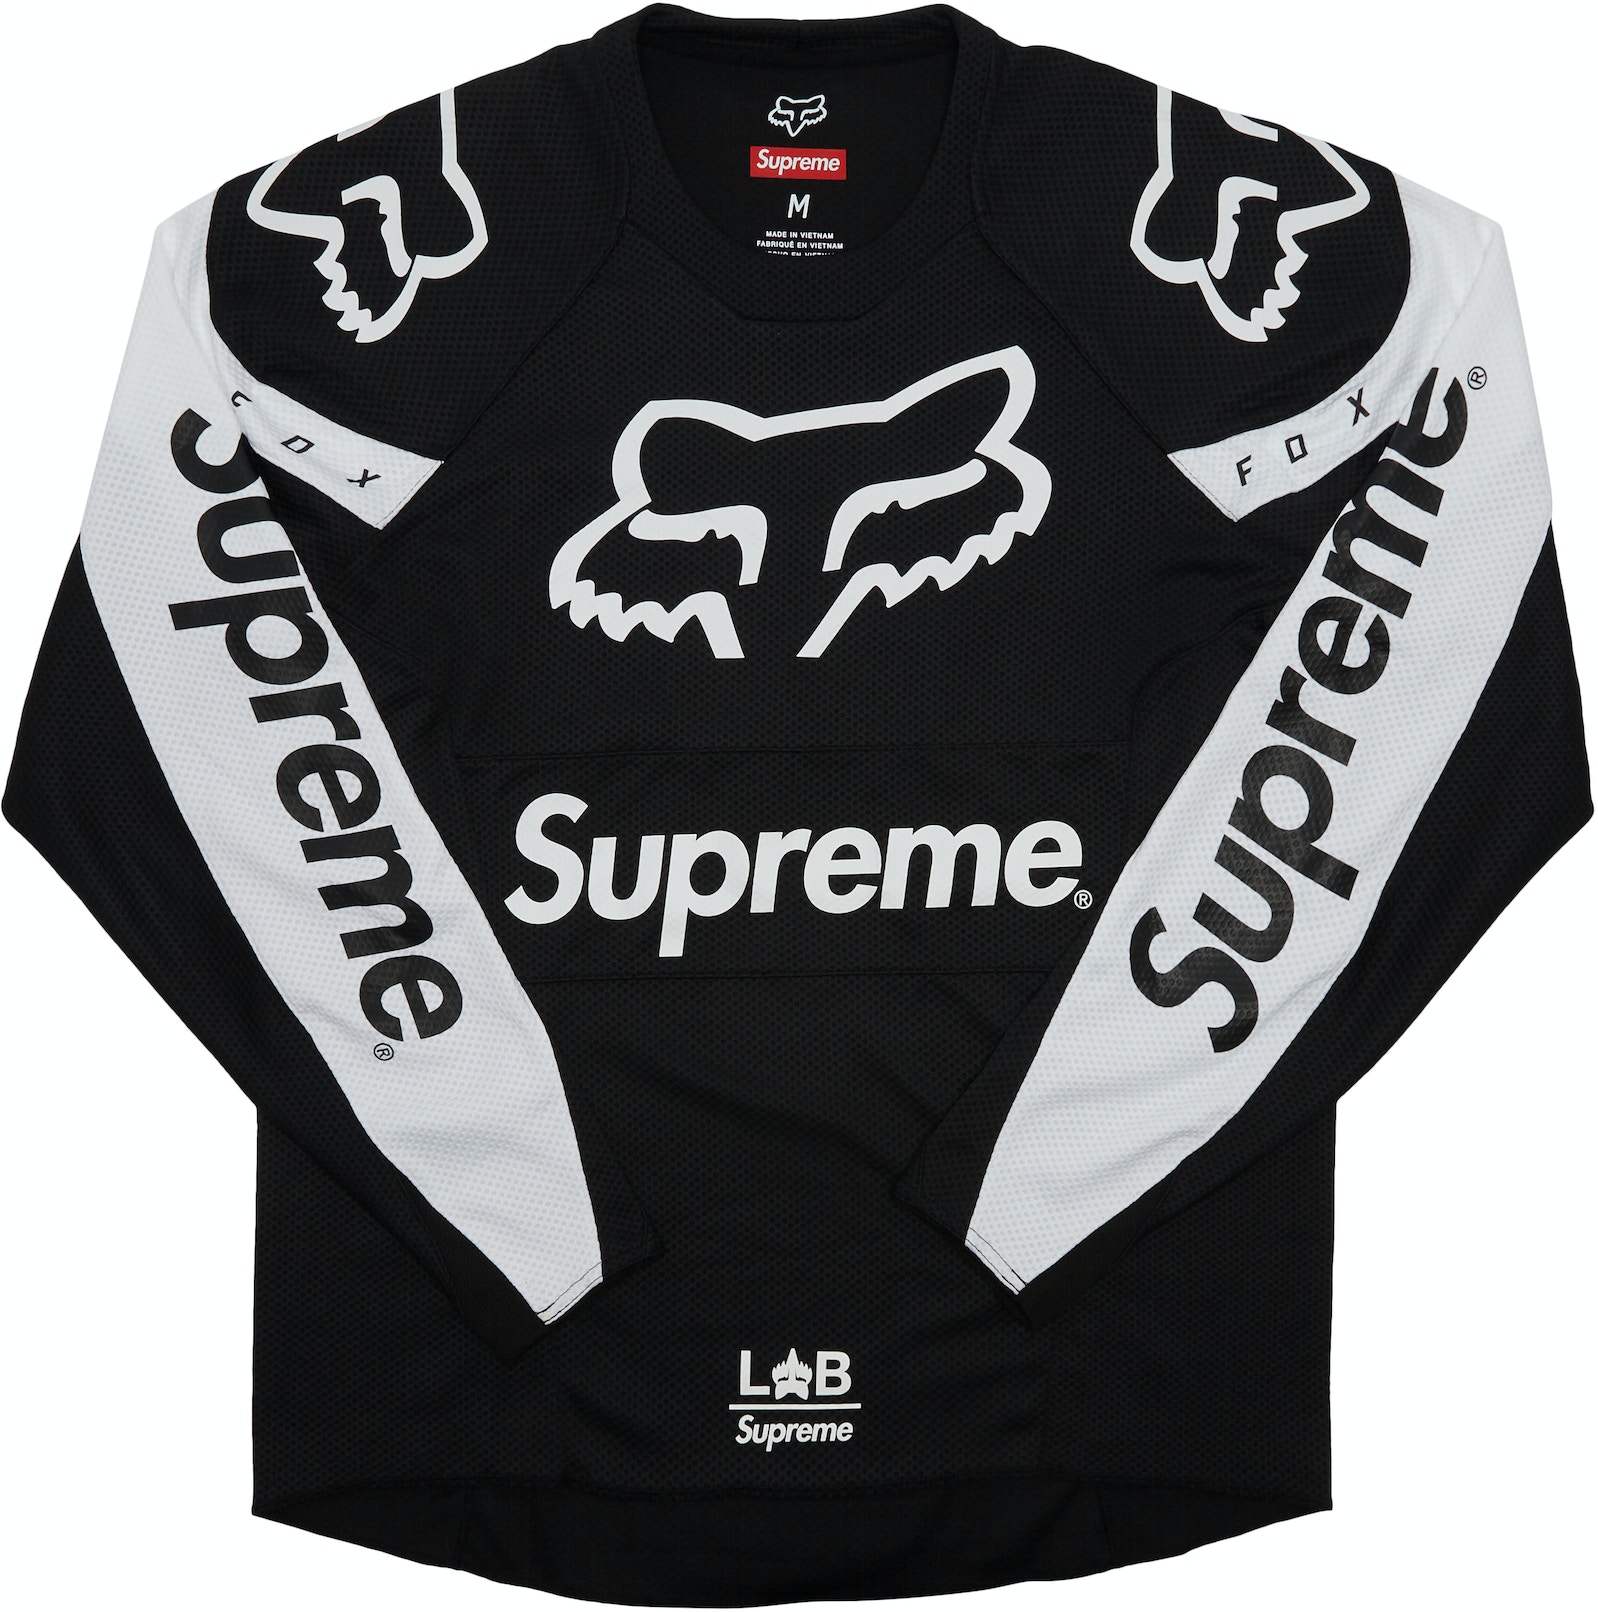 Supreme Fox Racing Moto Jersey Top Black - SS18